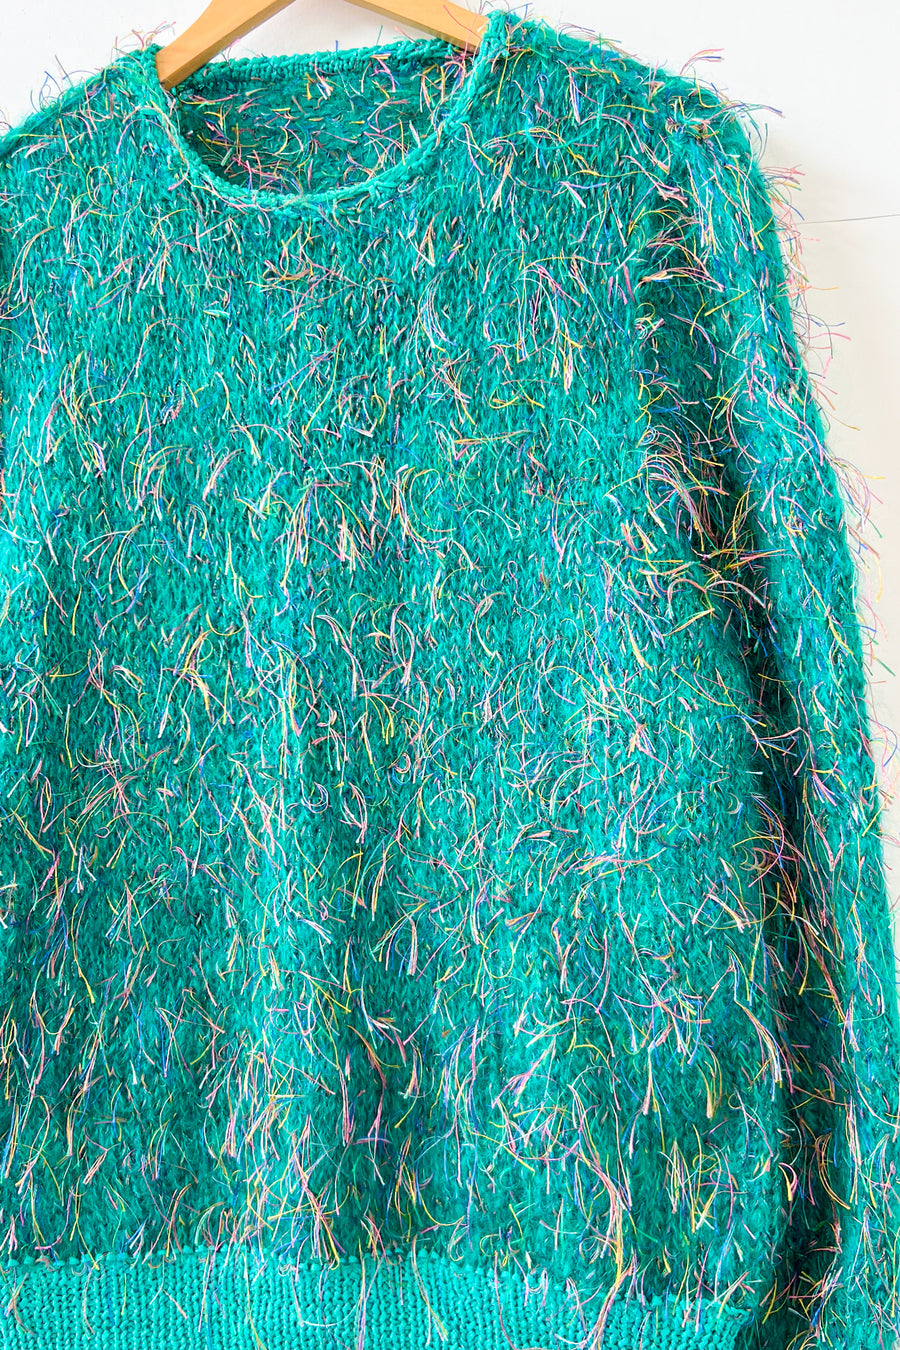 Vintage Hand Knitted Rag Thread Jumper